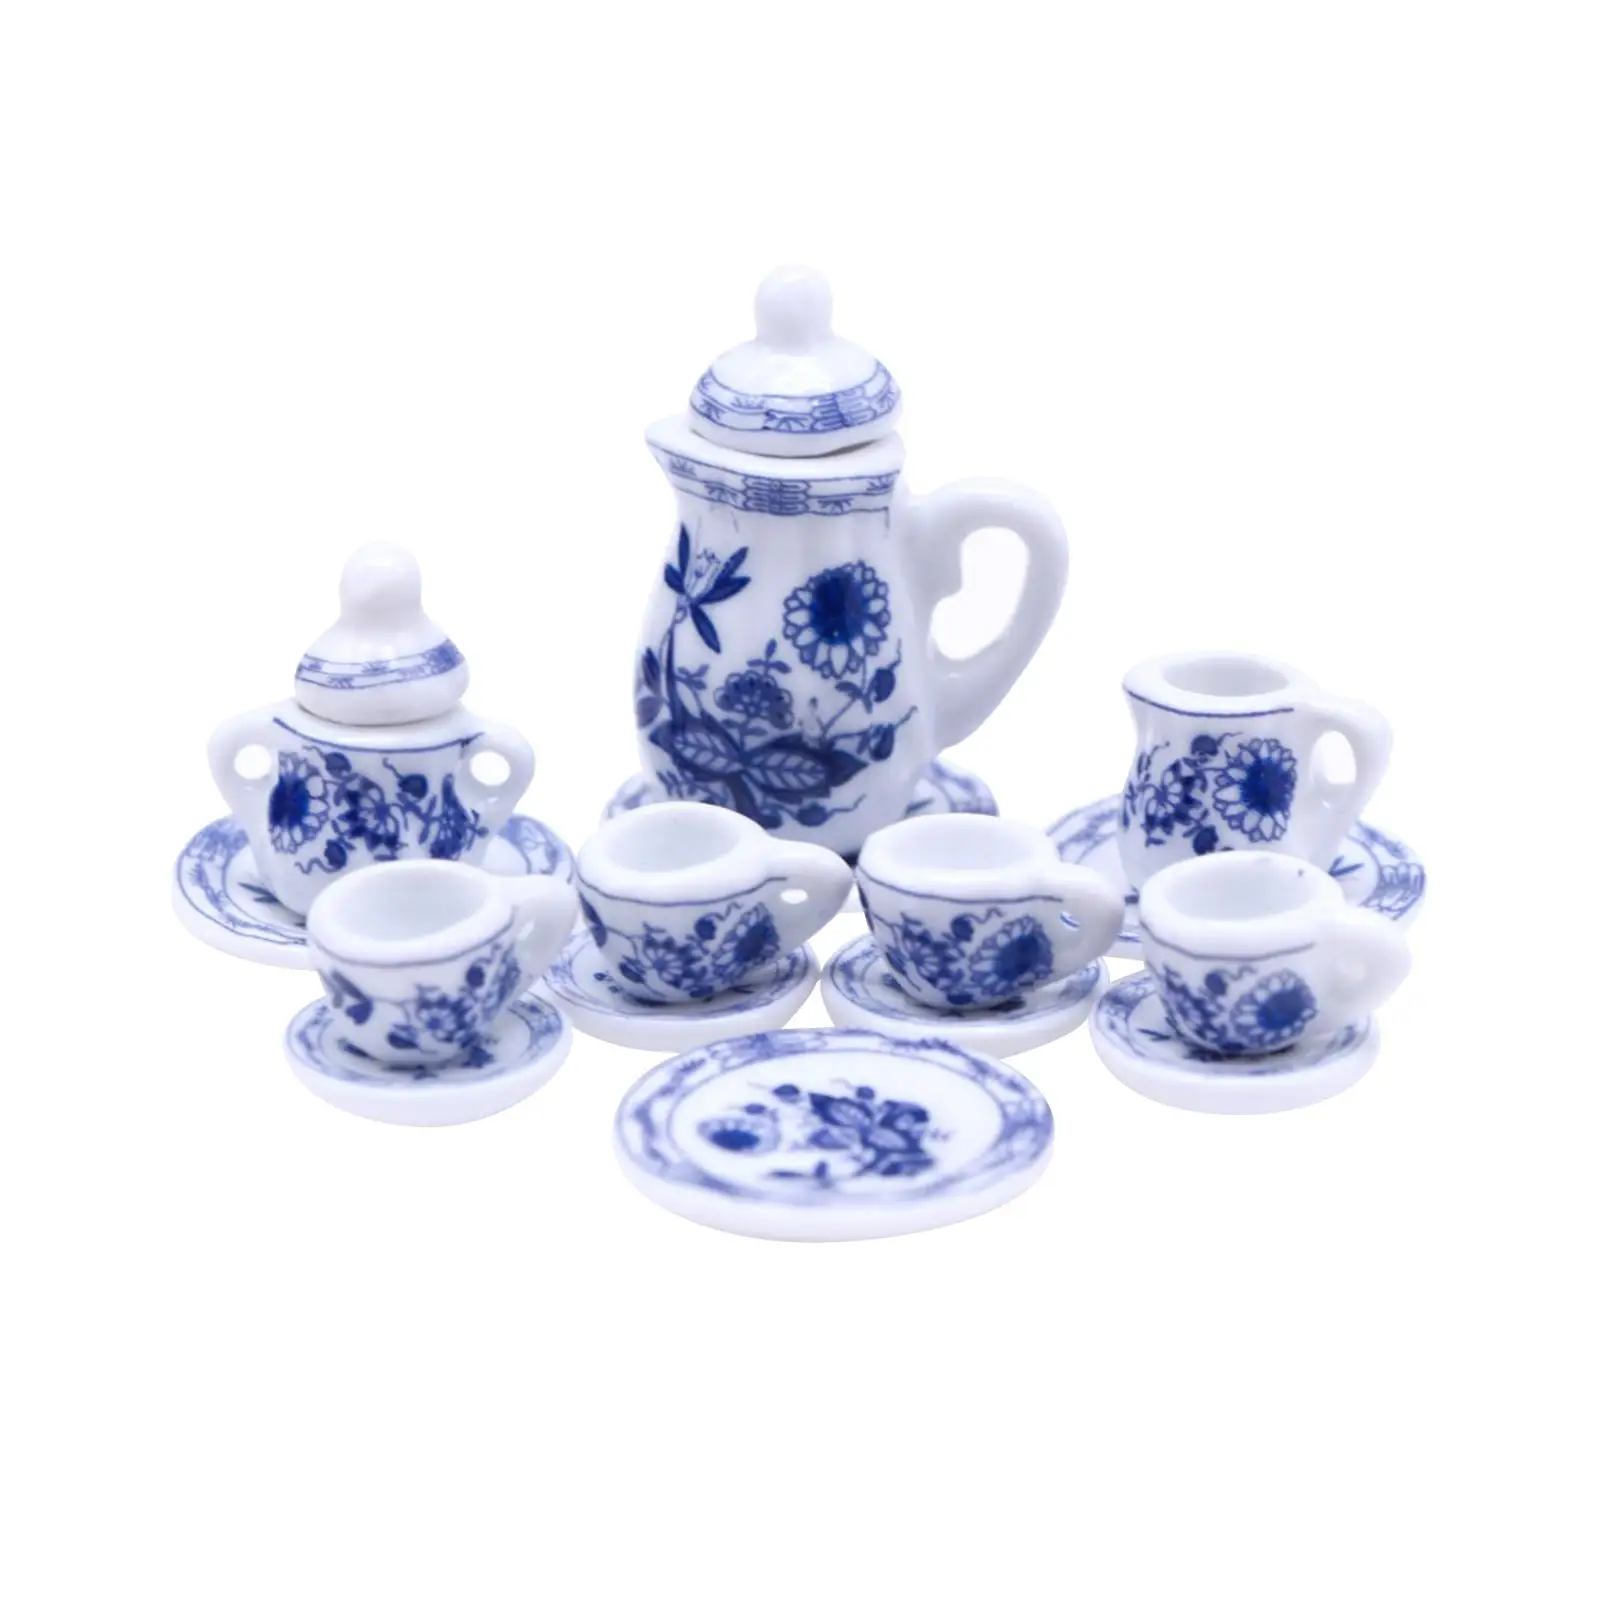 15x 1/12 Dollhouse Miniature Teapot Cup Tea Set Miniature Set for Kitchen